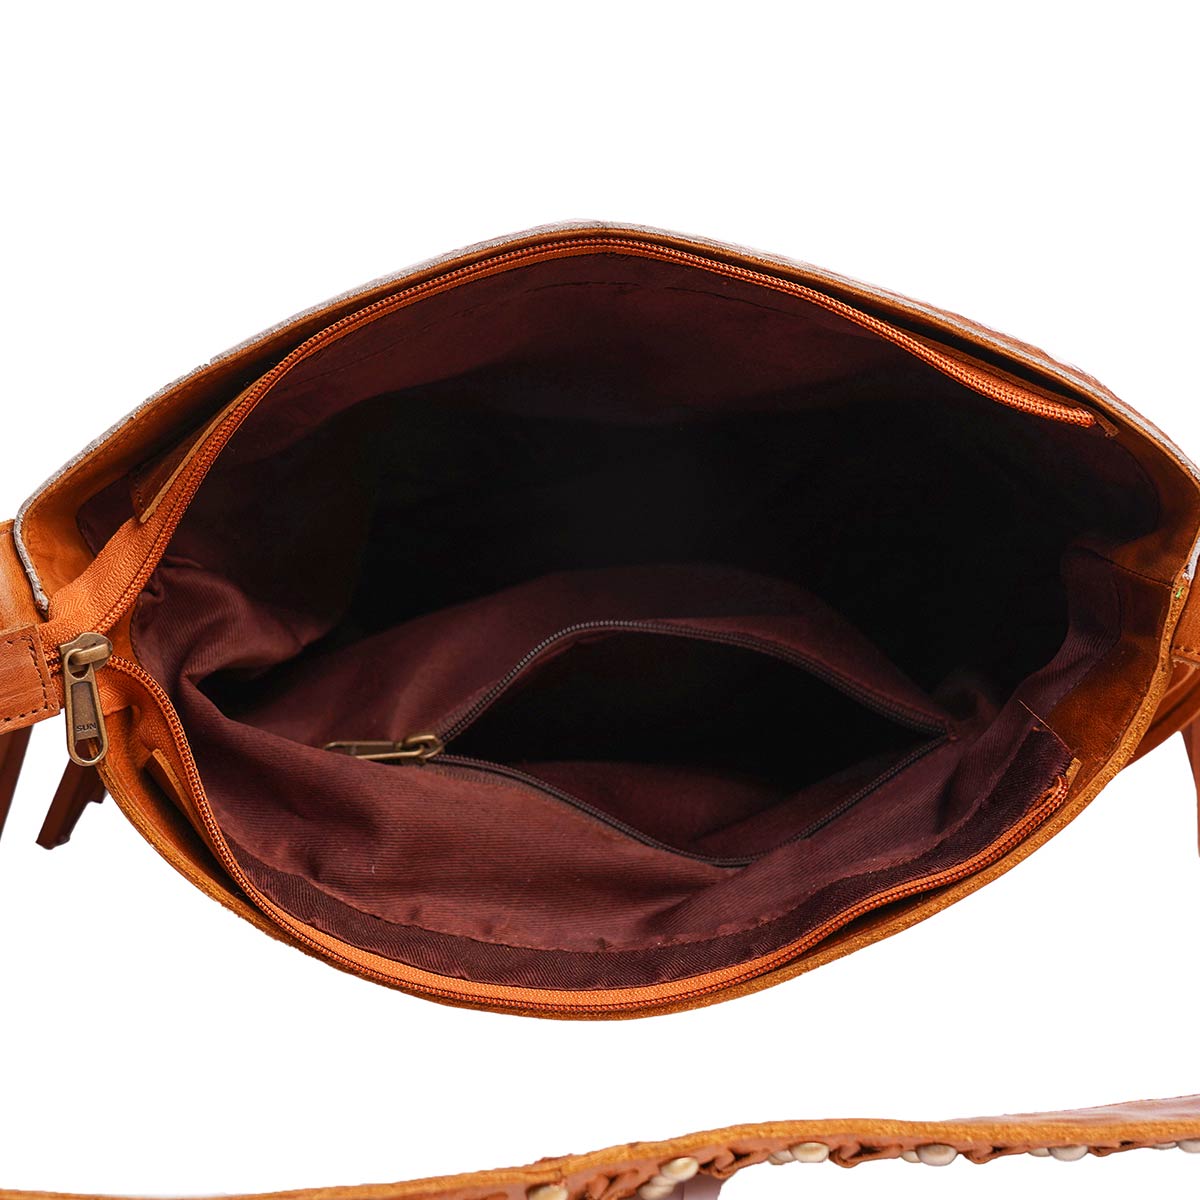 CoboeHi- Leather Tote Bag